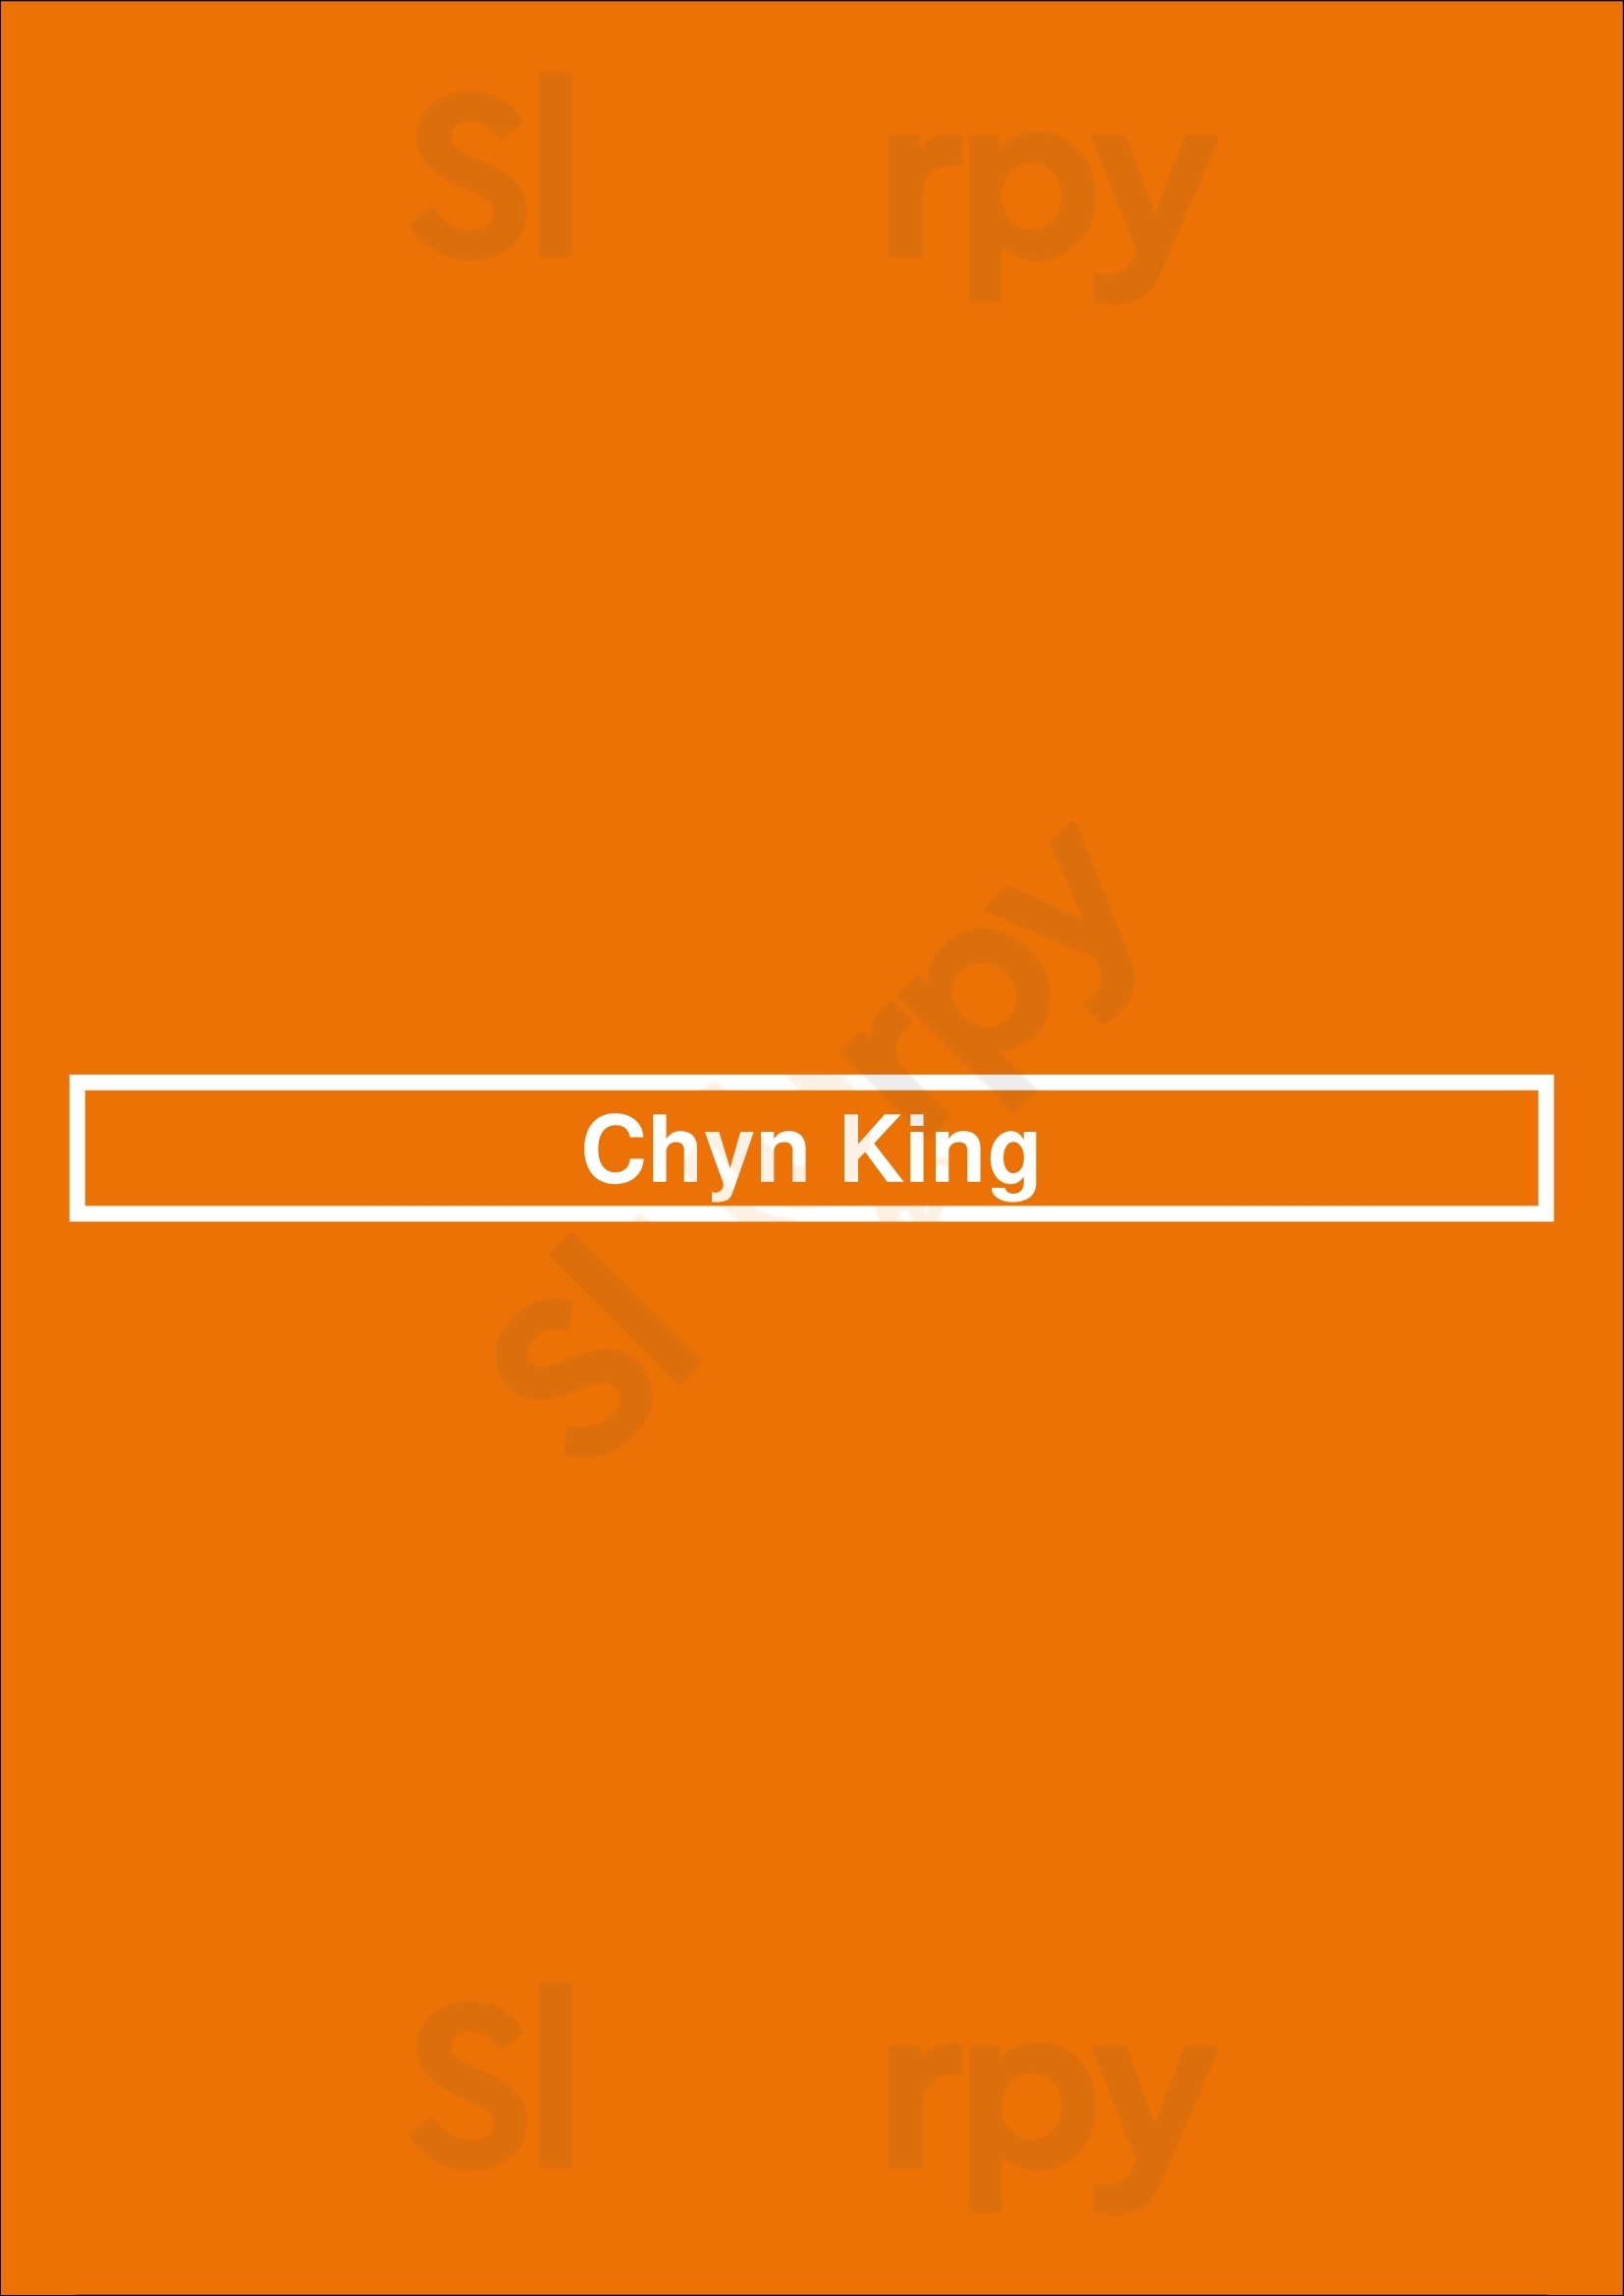 Chyn King Los Angeles Menu - 1